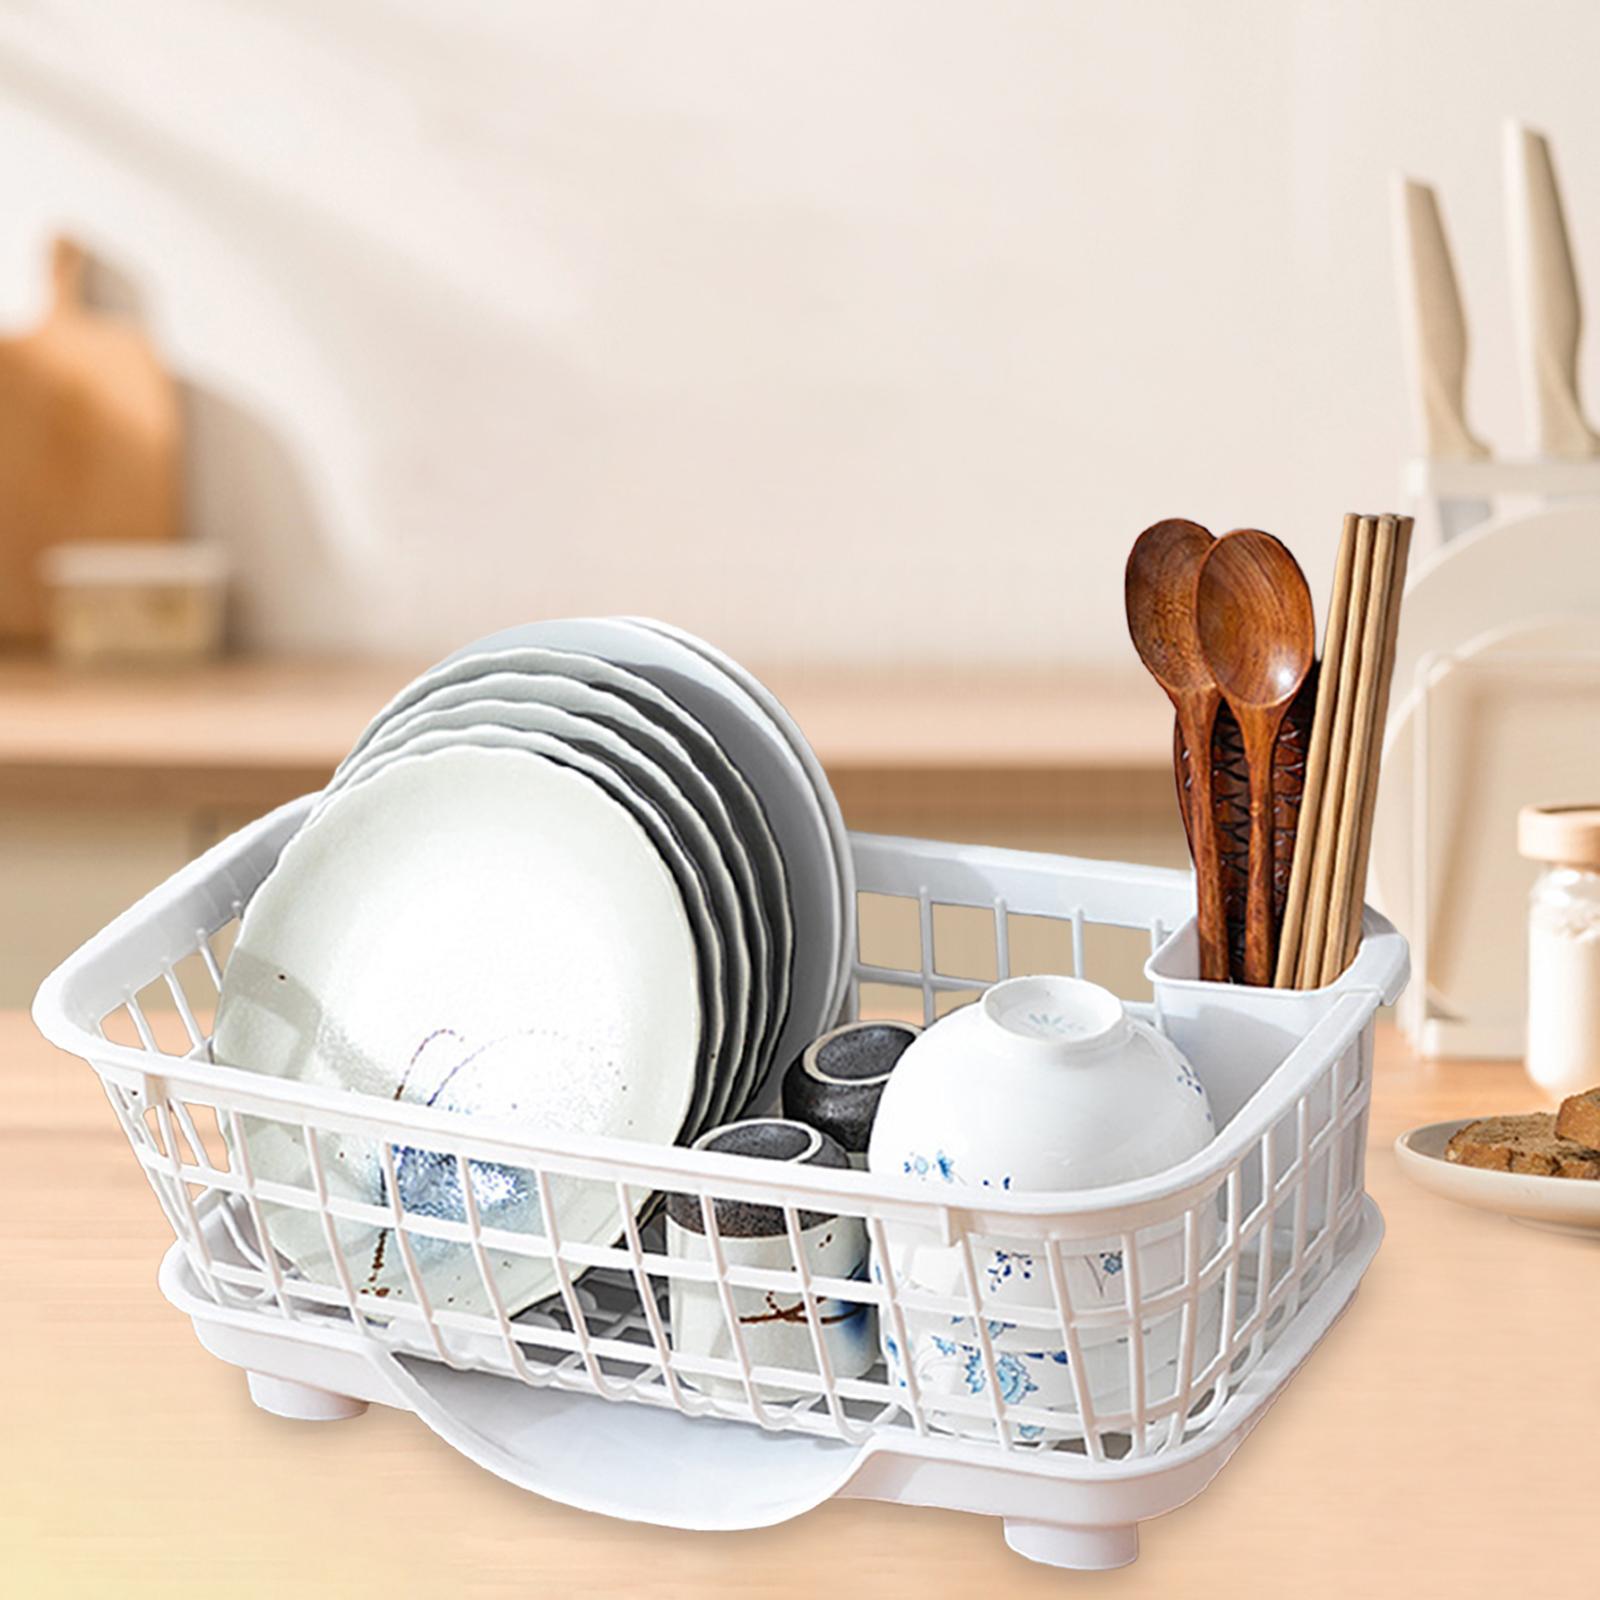 over The Sink Dish Rack Basket Bowl Drying Holder for Dish Chopsticks Spoons